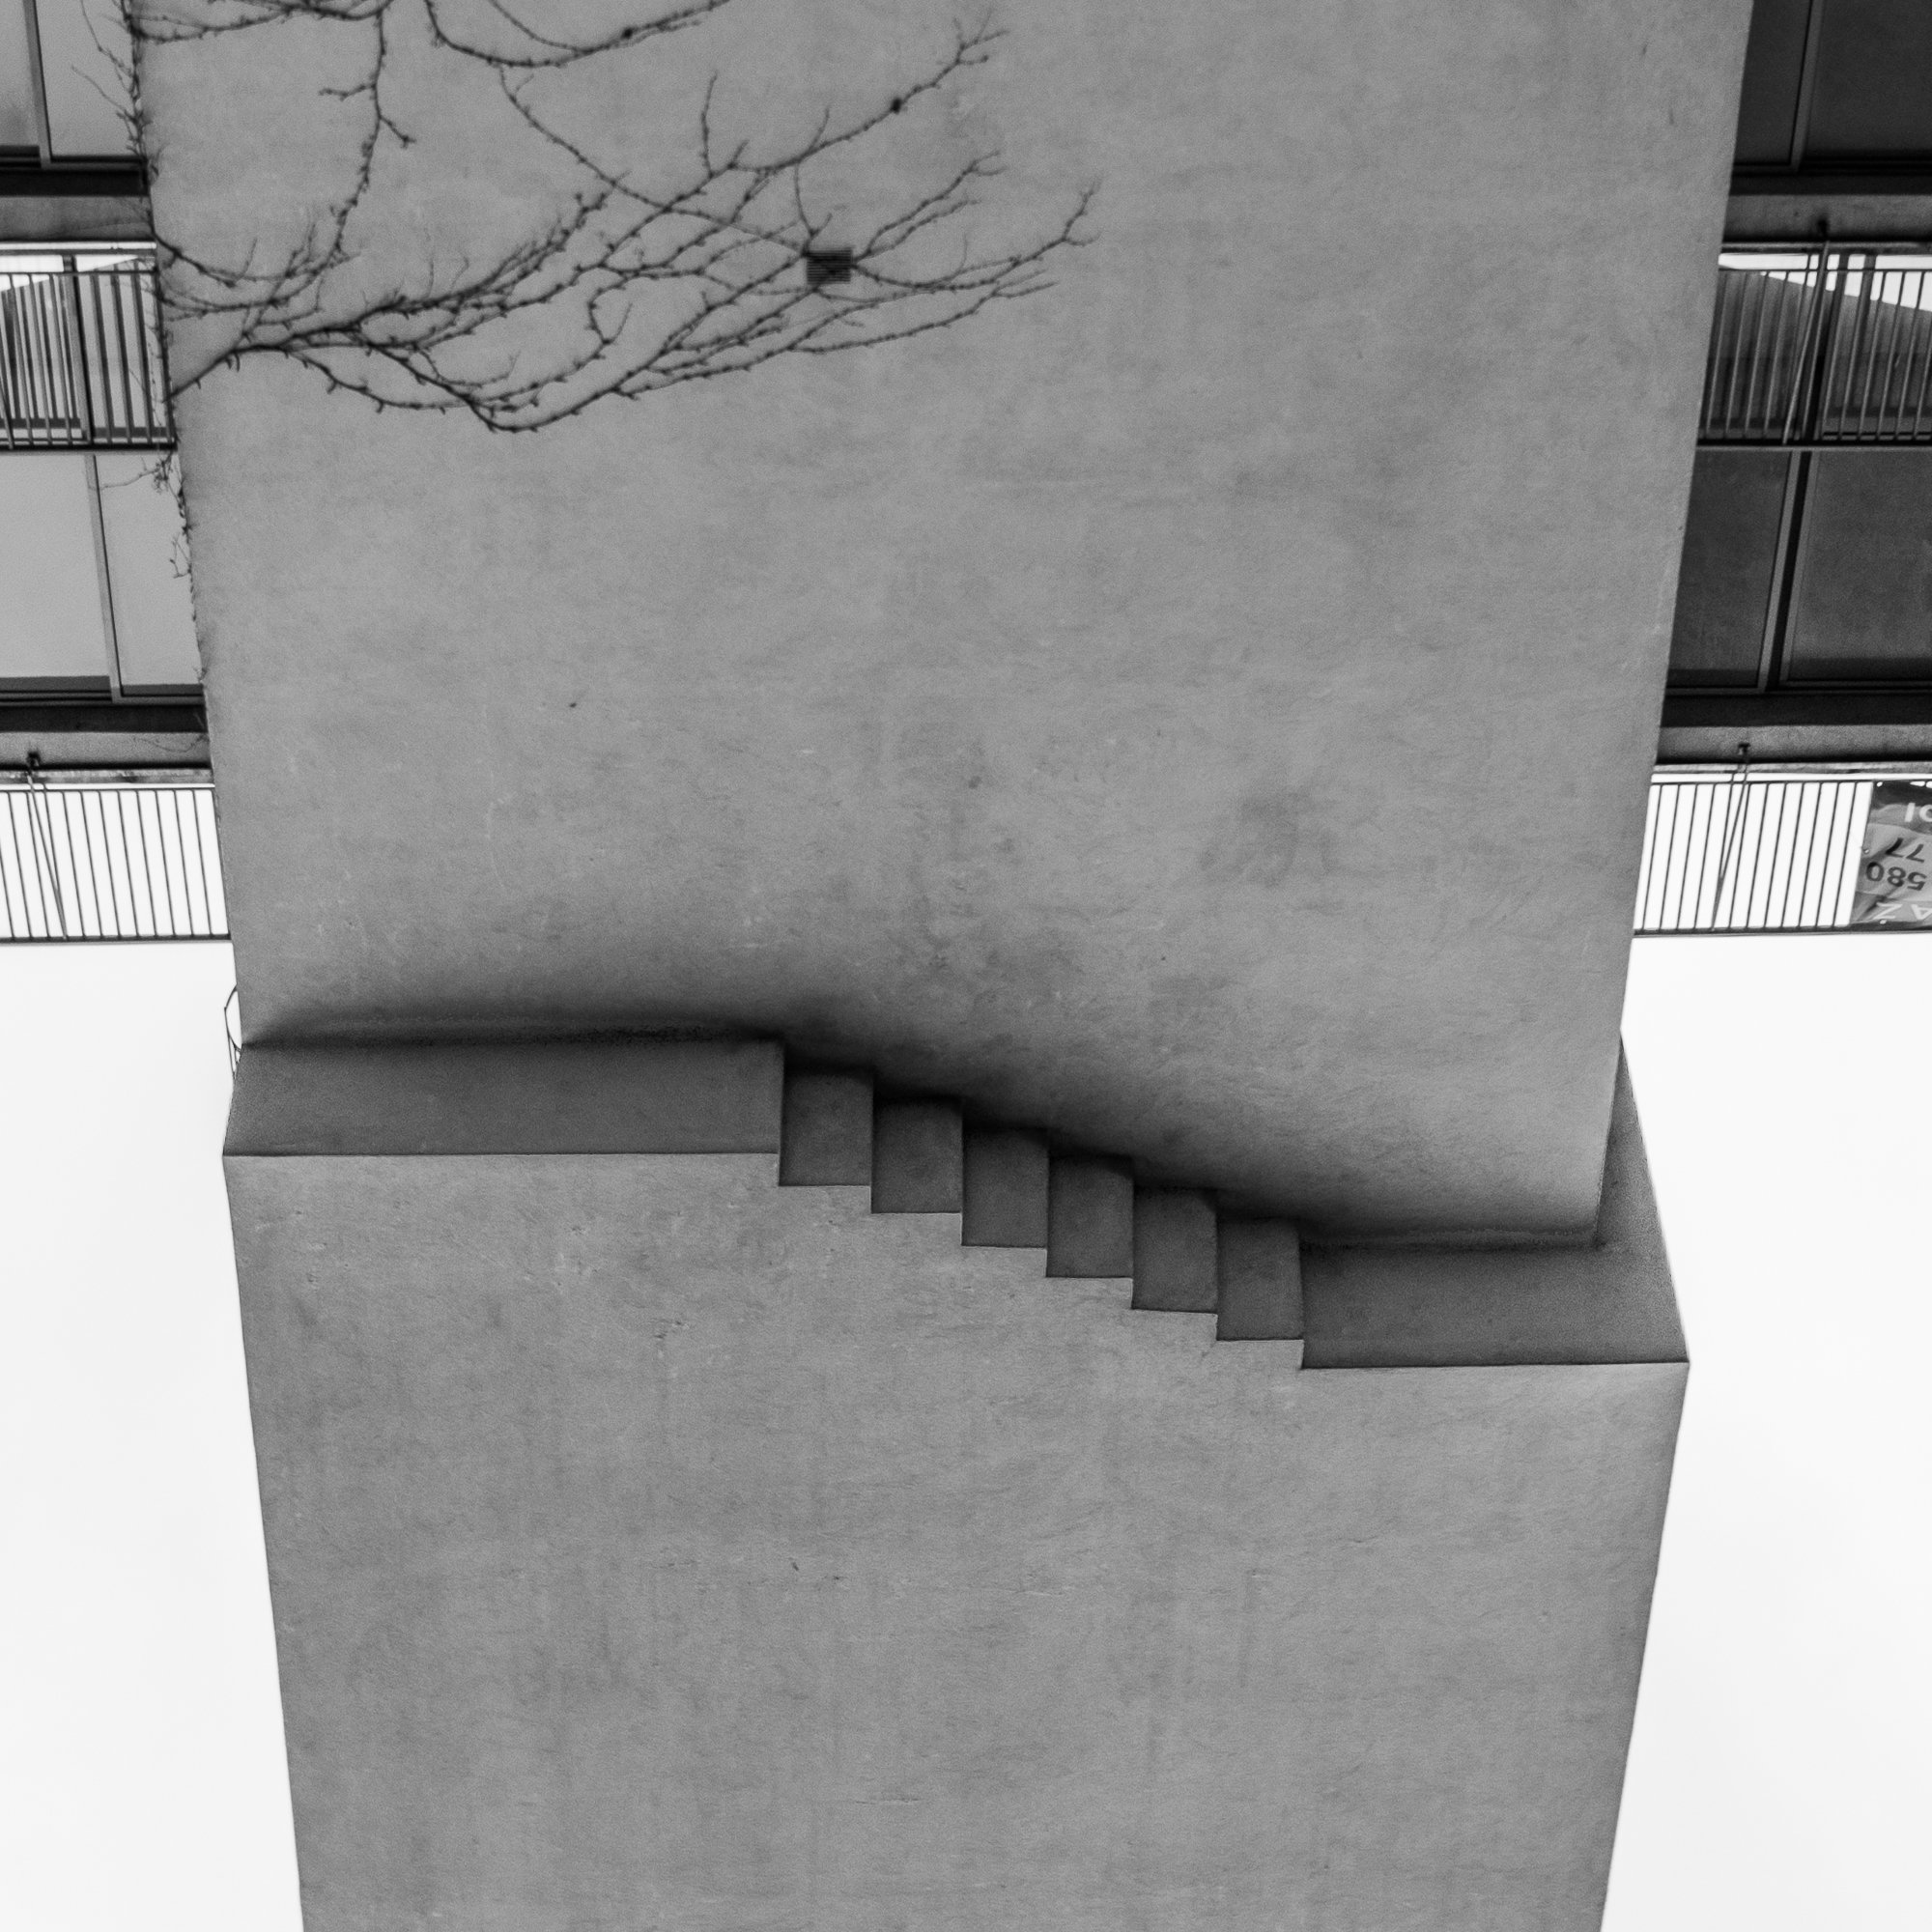 Adam Mazek Photography Warsaw 2016. Doubts. Stairs. Square. Minimalism. Upside down.